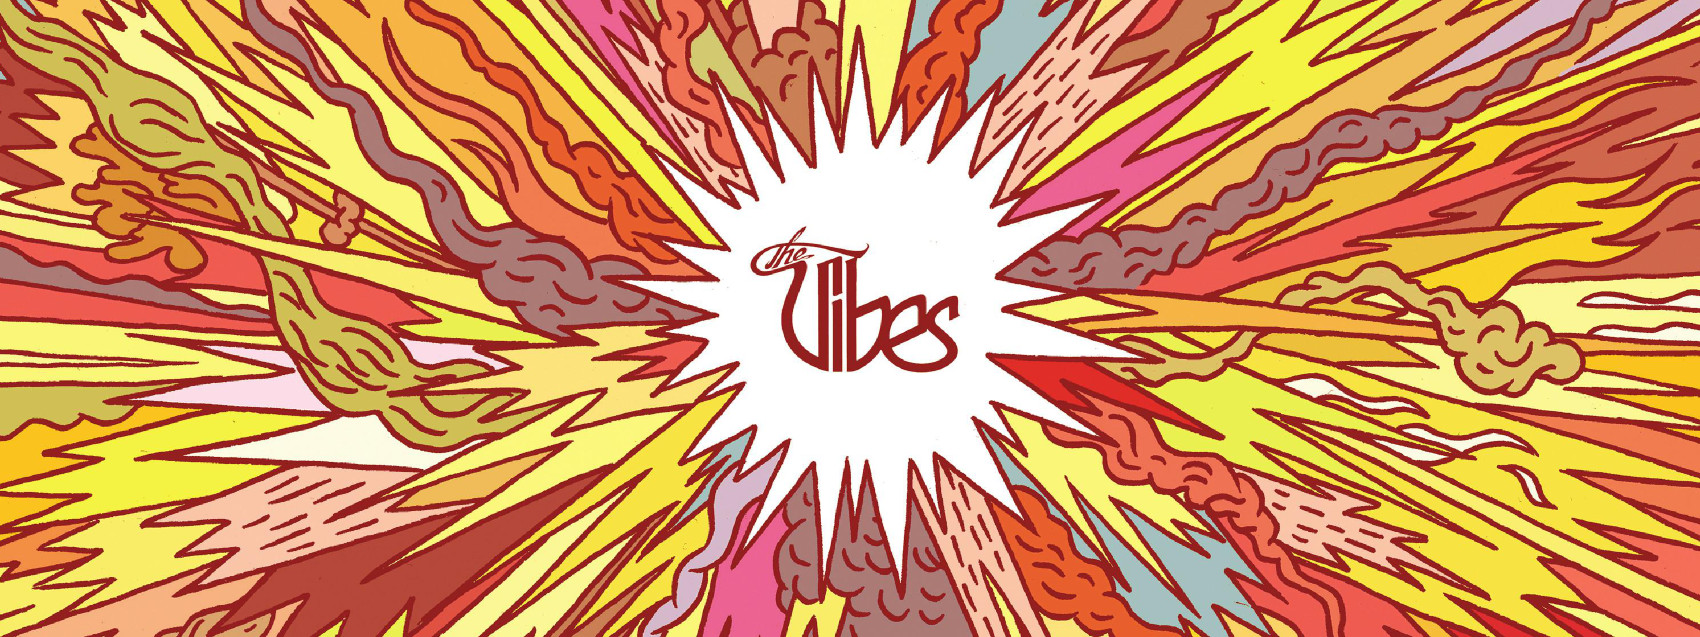 The Vibes - T.C.B. Rock'n'Roll